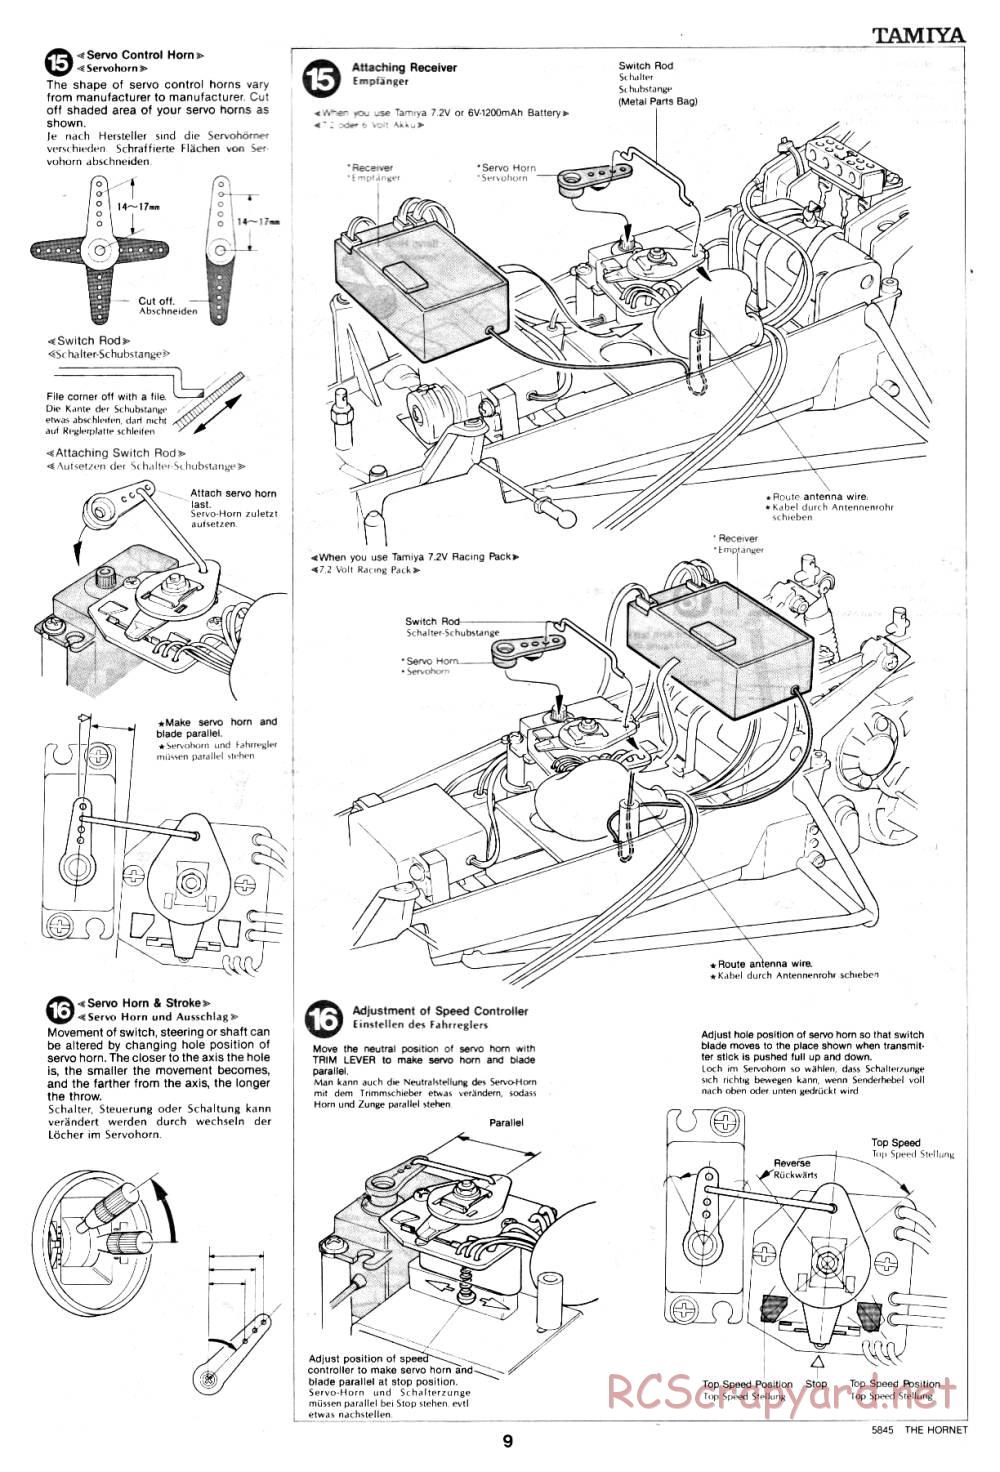 Tamiya - The Hornet - 58045 - Manual - Page 9